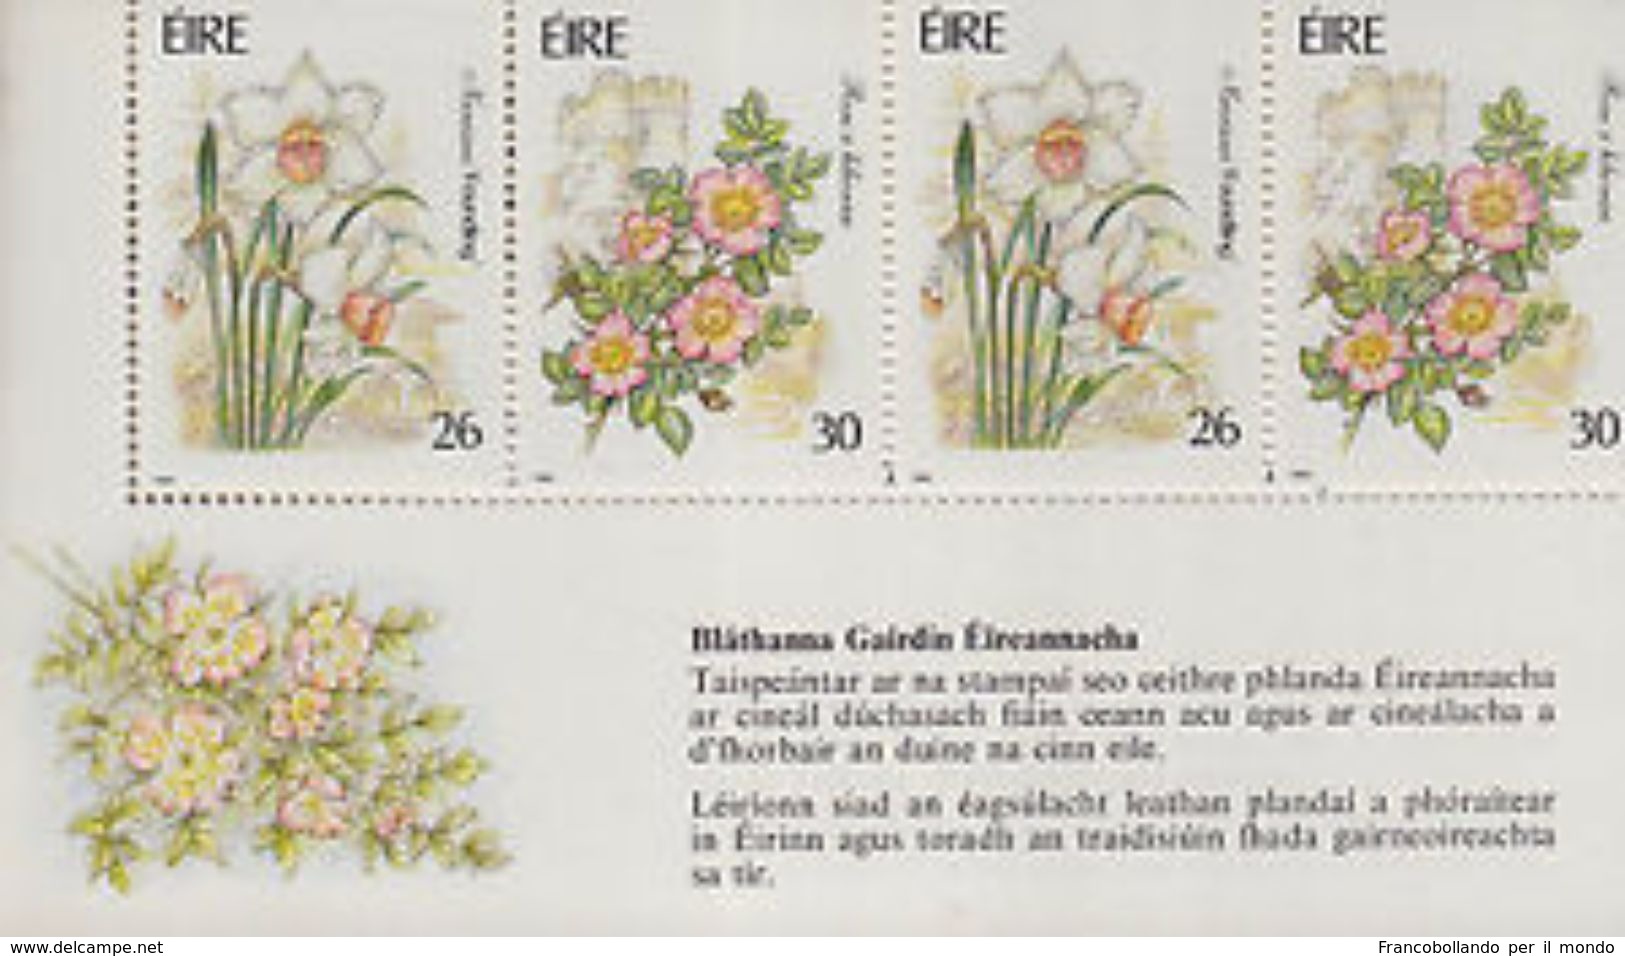 IRELAND 1990 IRISH GARDEN FLOWERS COMMEMORATIVE STAMP BOOKLET - SG SB36 - Booklets